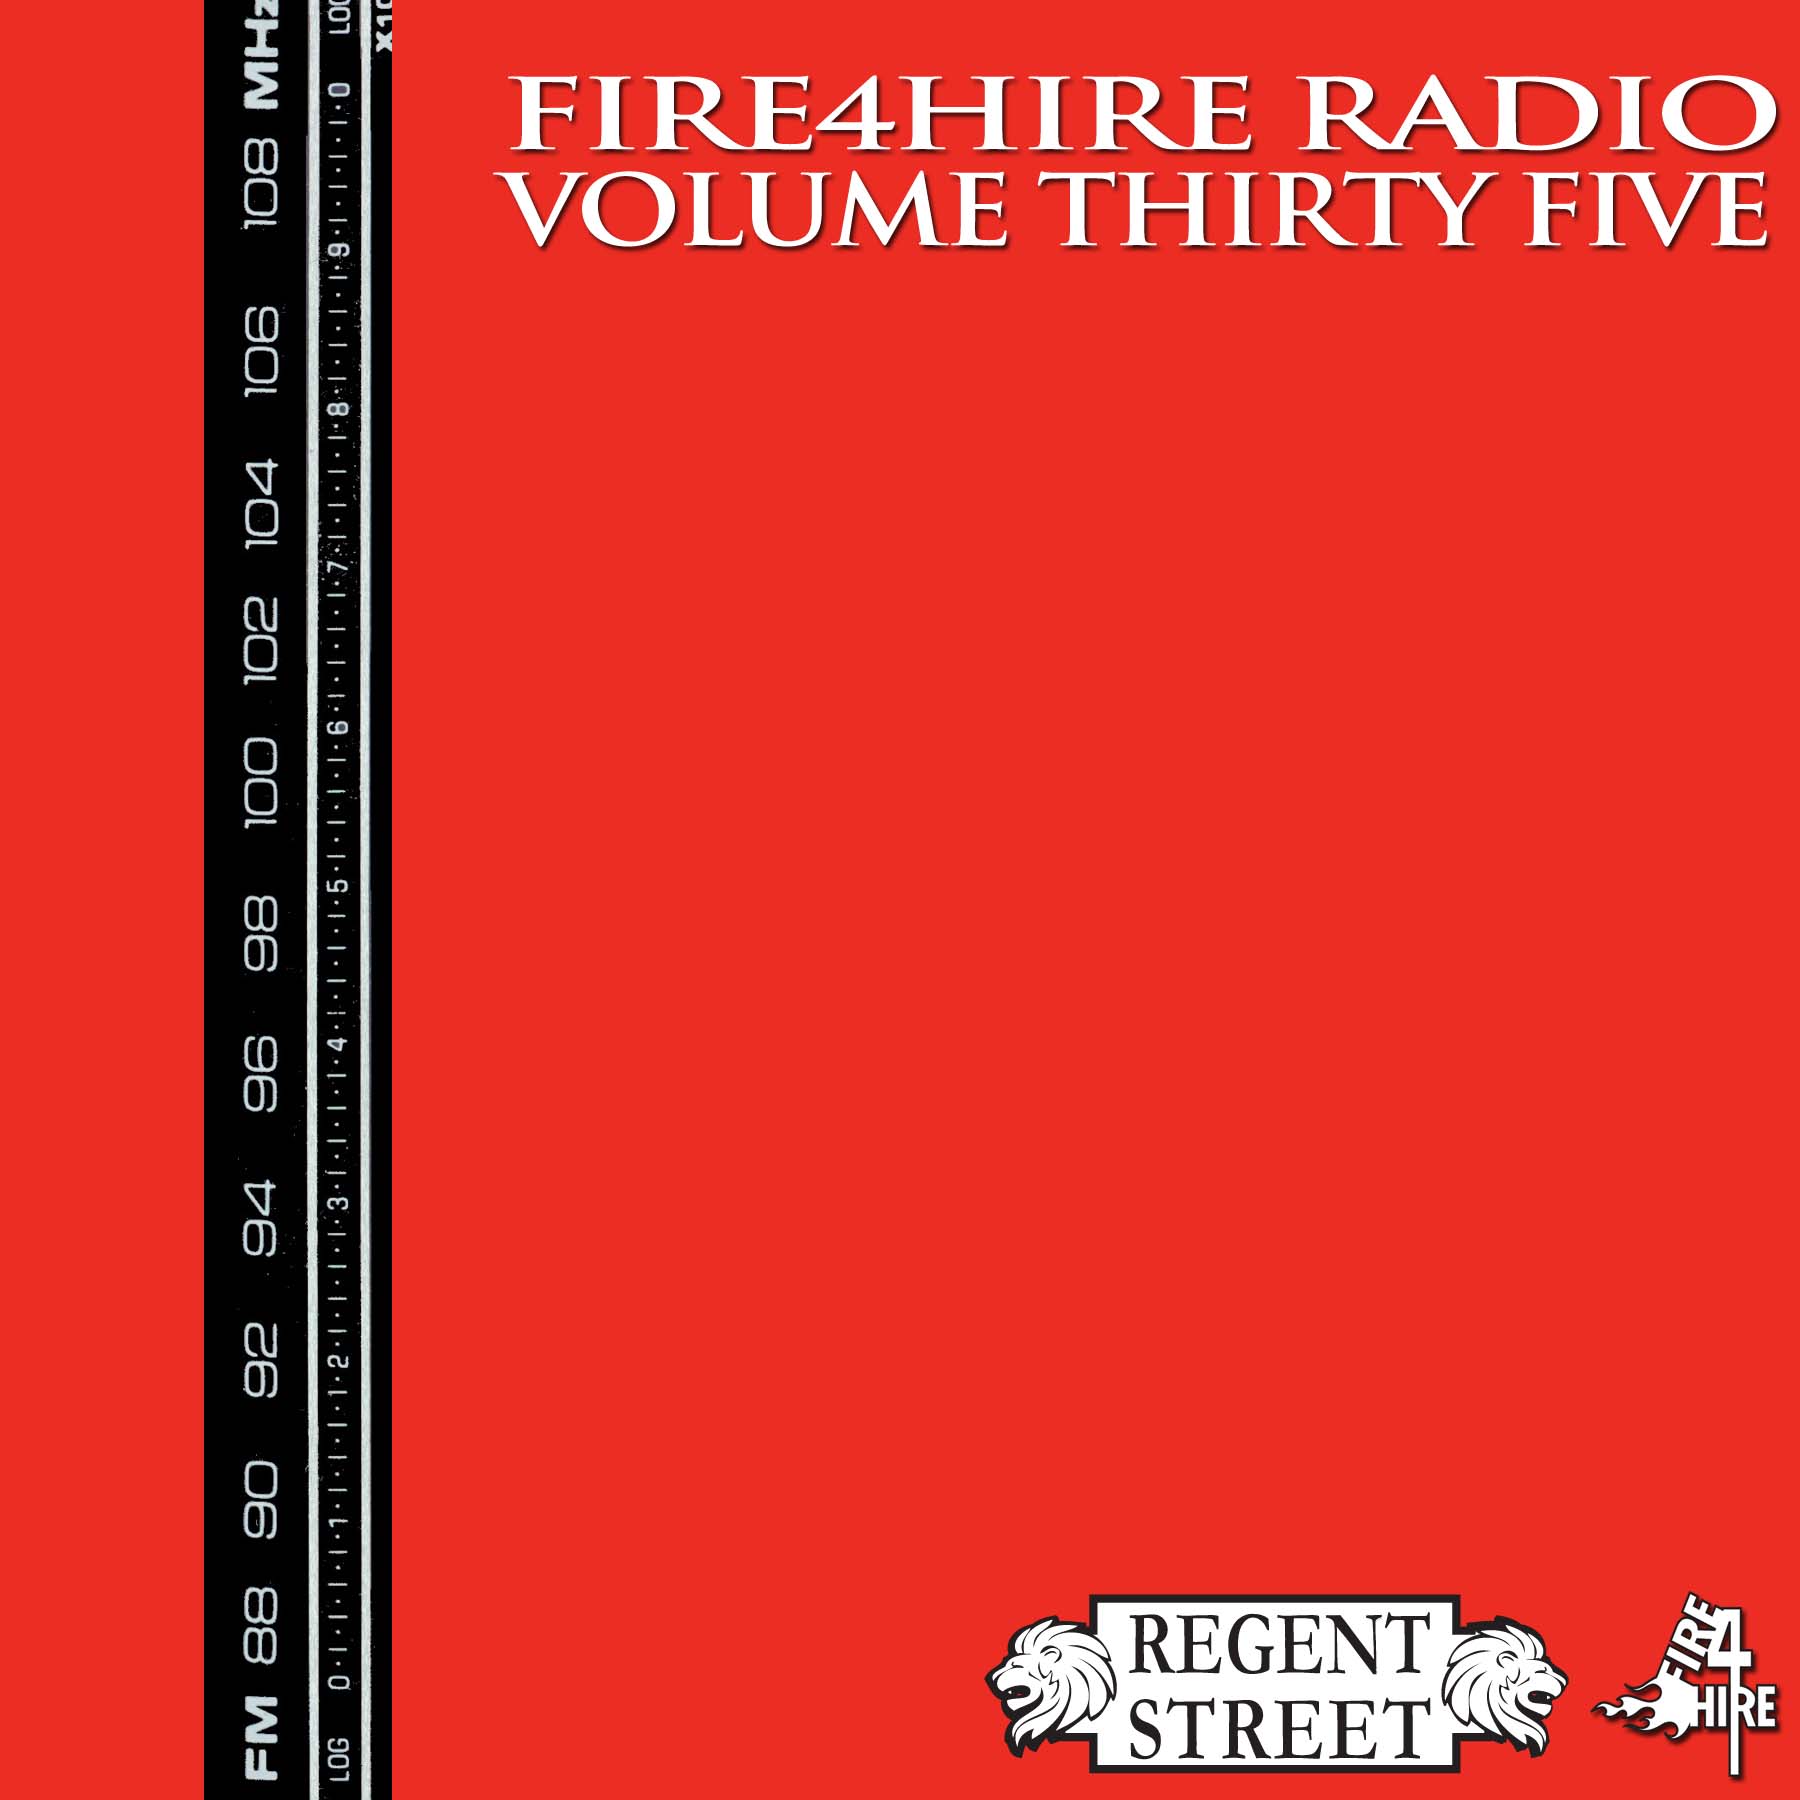 Regent Street Fire 4 Hire Radio